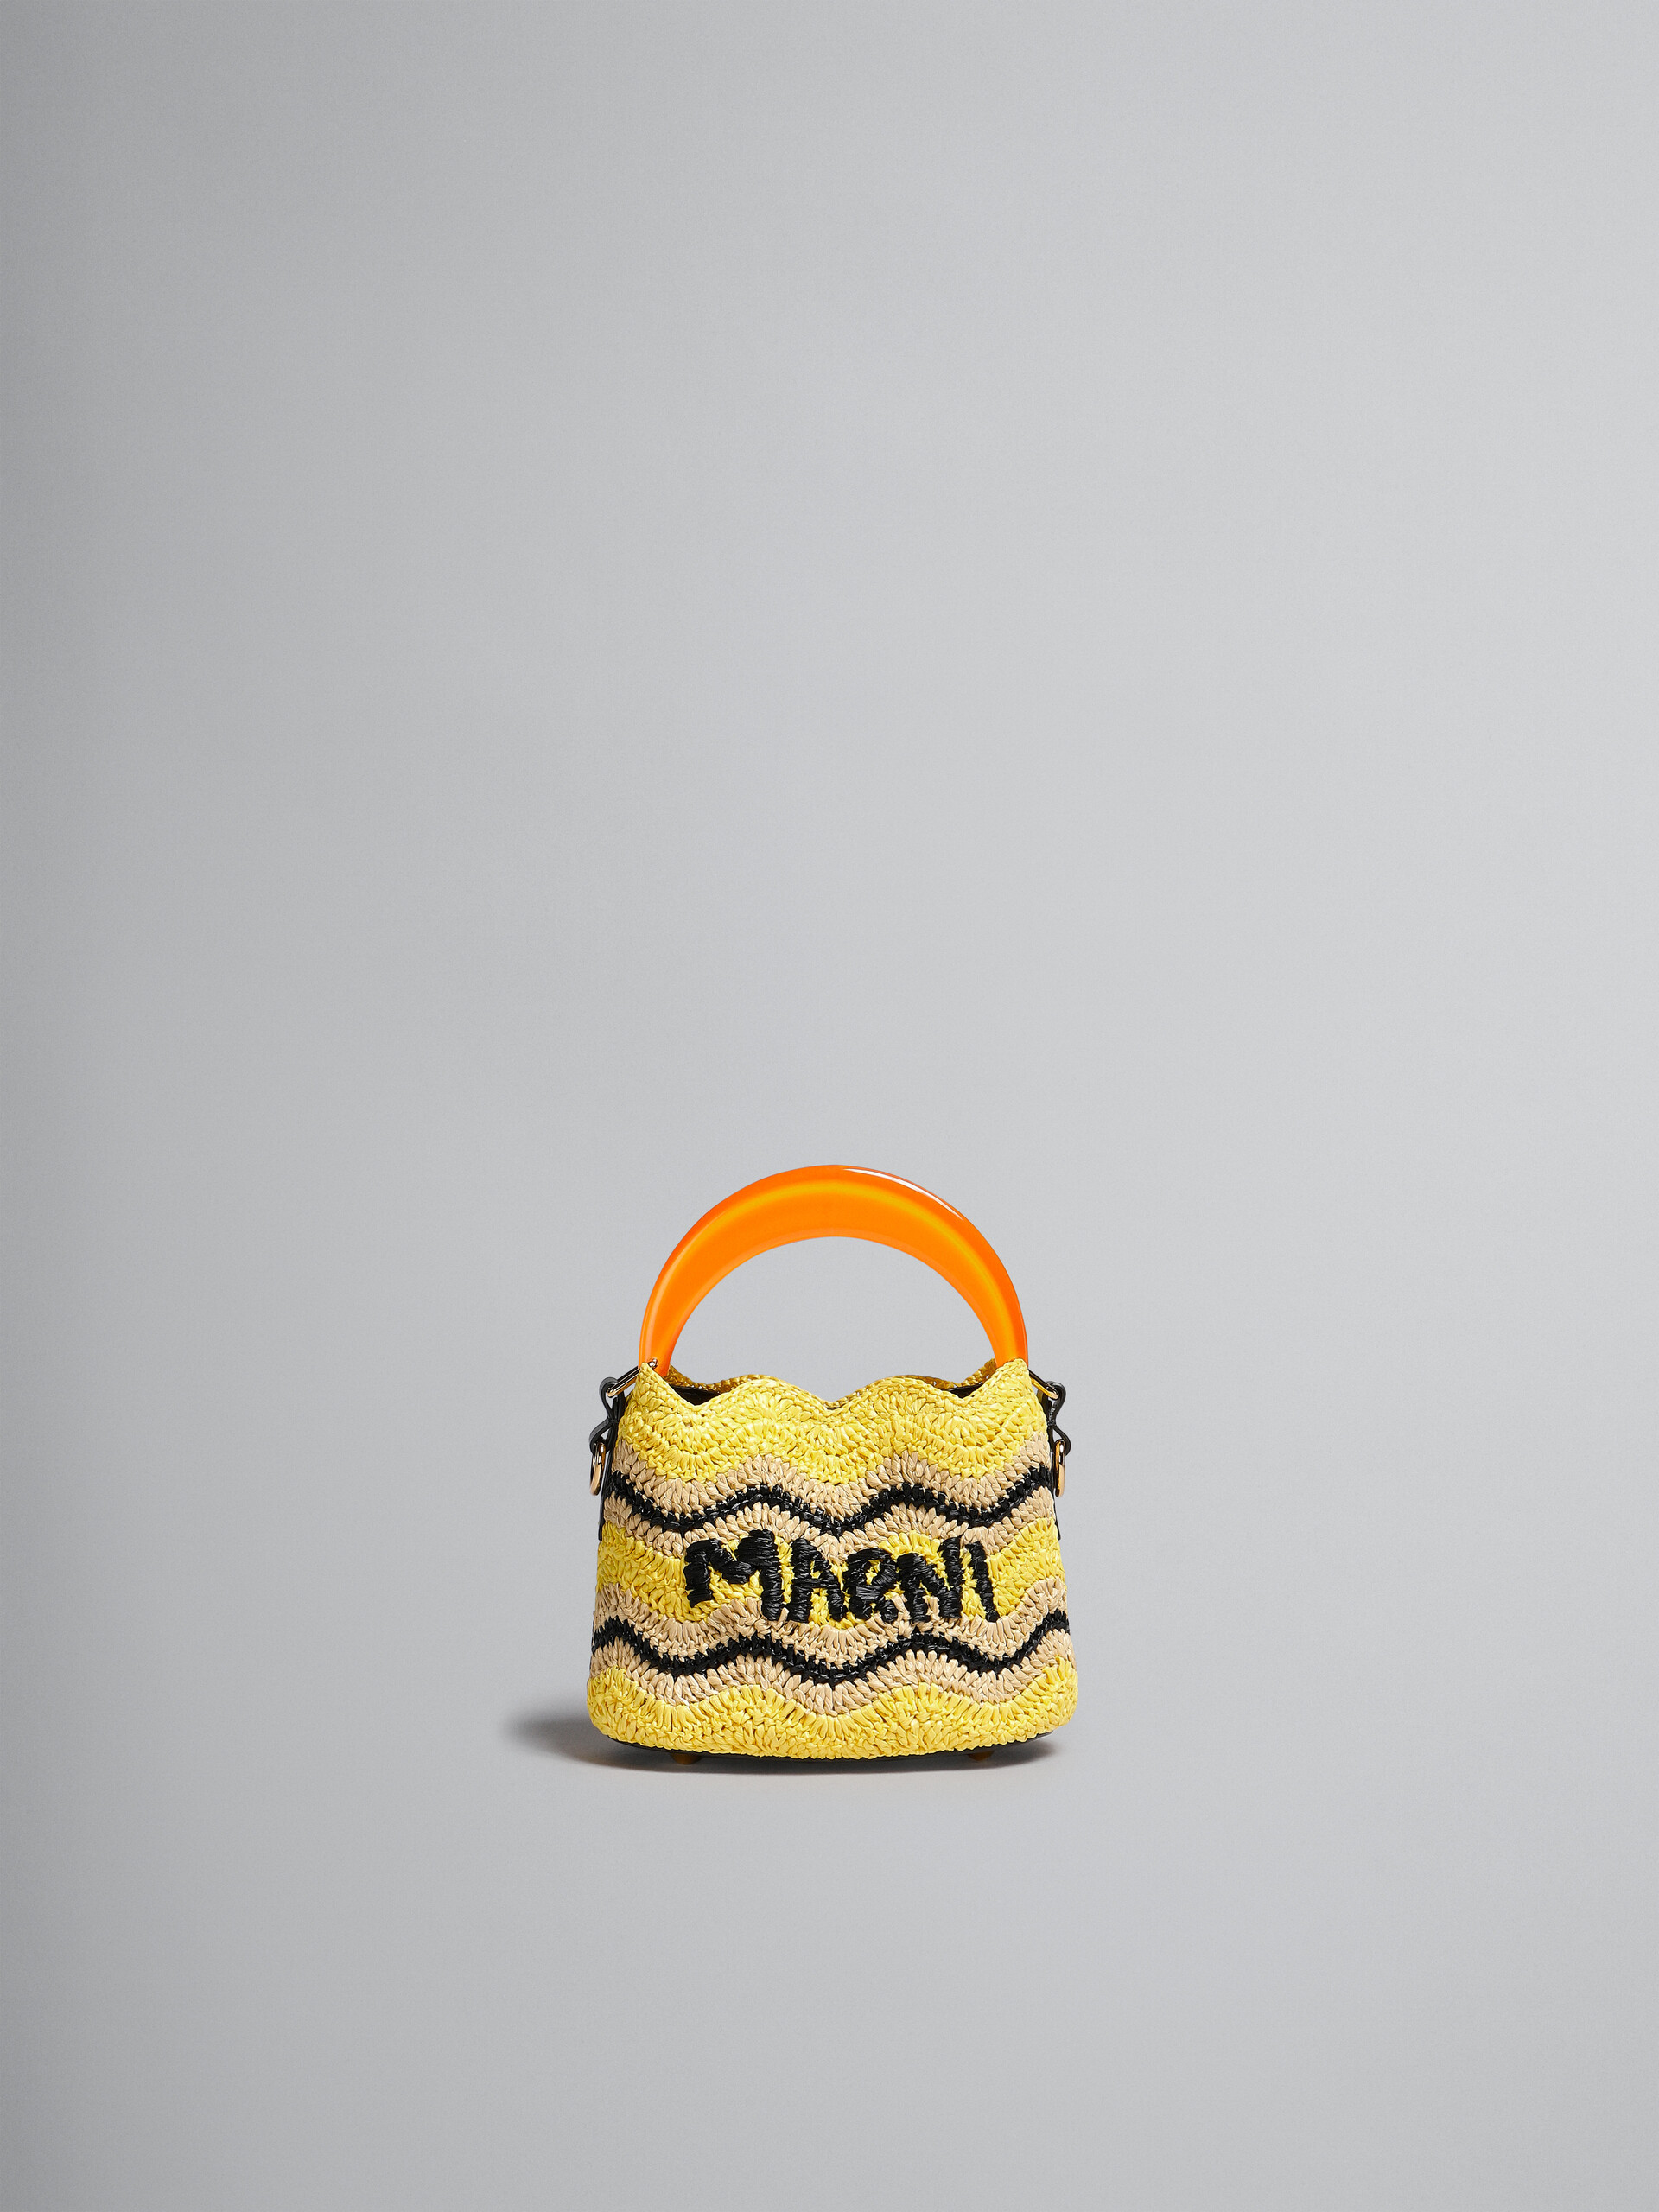 Marni x No Vacancy Inn - Venice Mini Bucket in yellow crochet raffia - Shoulder Bag - Image 1